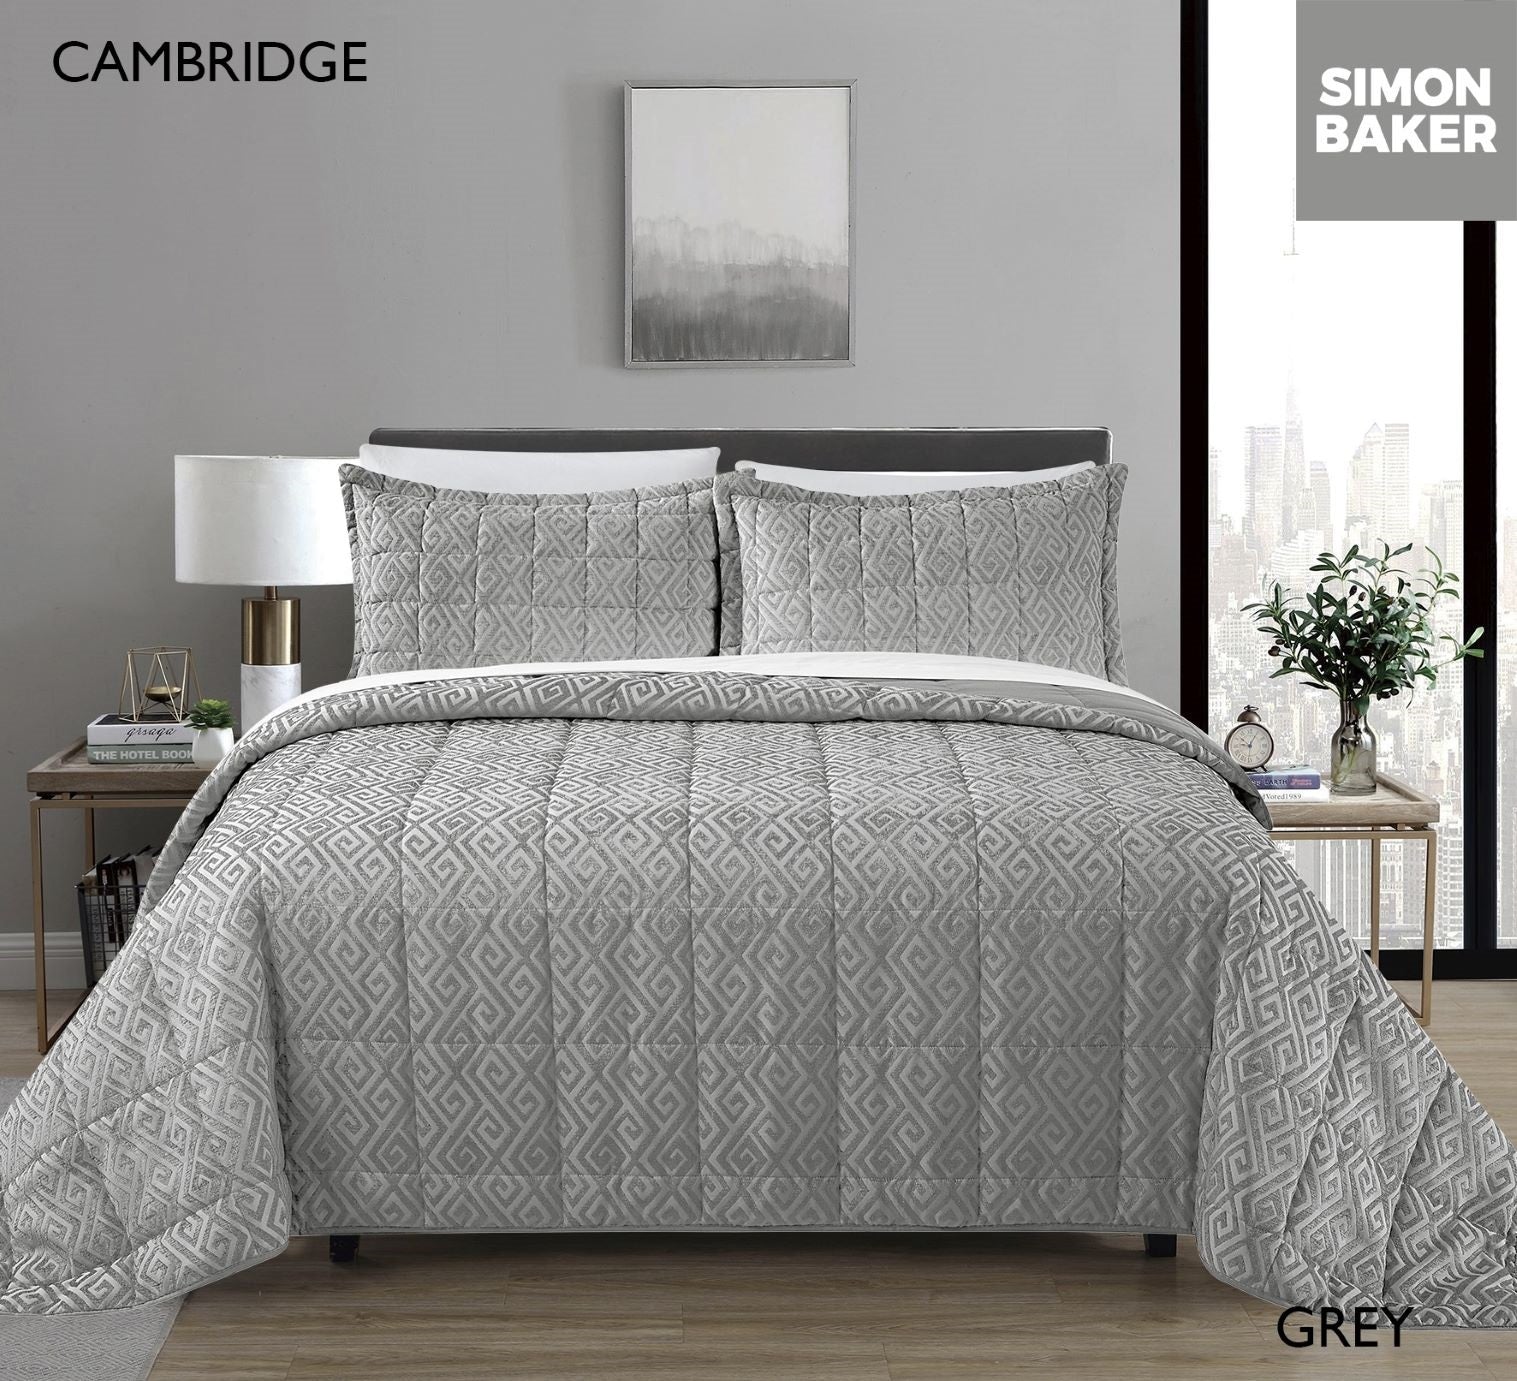 Cambridge Comforter Set